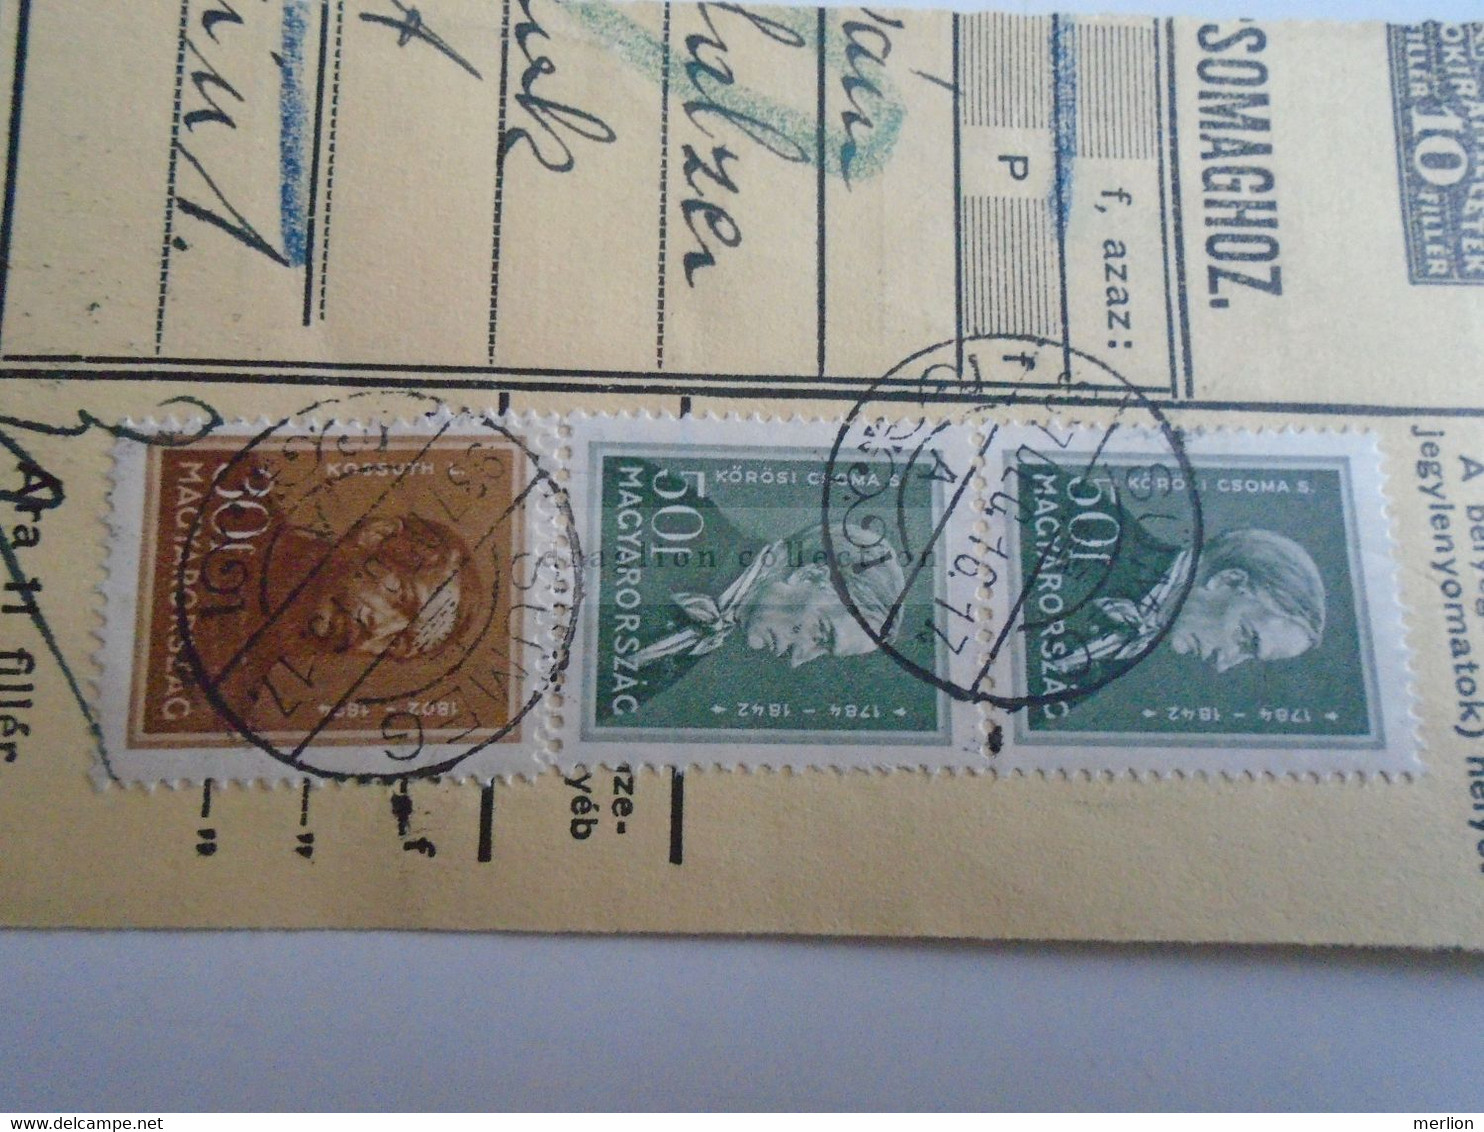 D187440    Parcel Card  (cut) Hungary 1937  SÜMEG- Budapest - Paquetes Postales